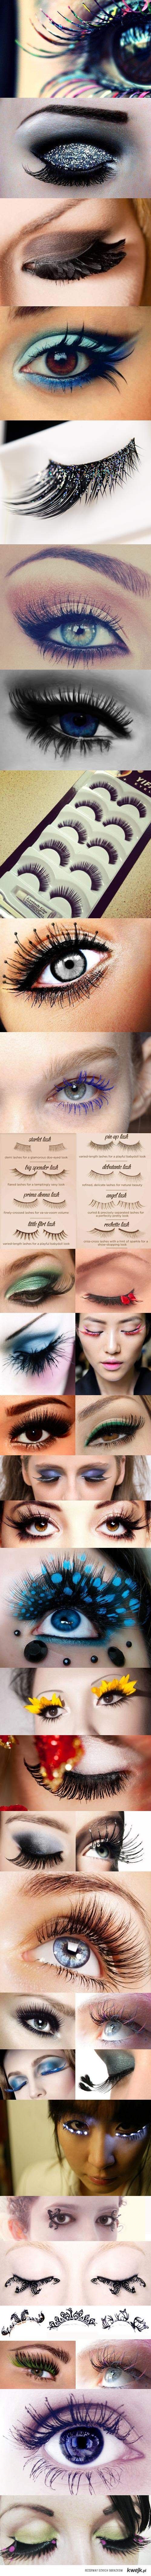 costume lashes & eye makeup